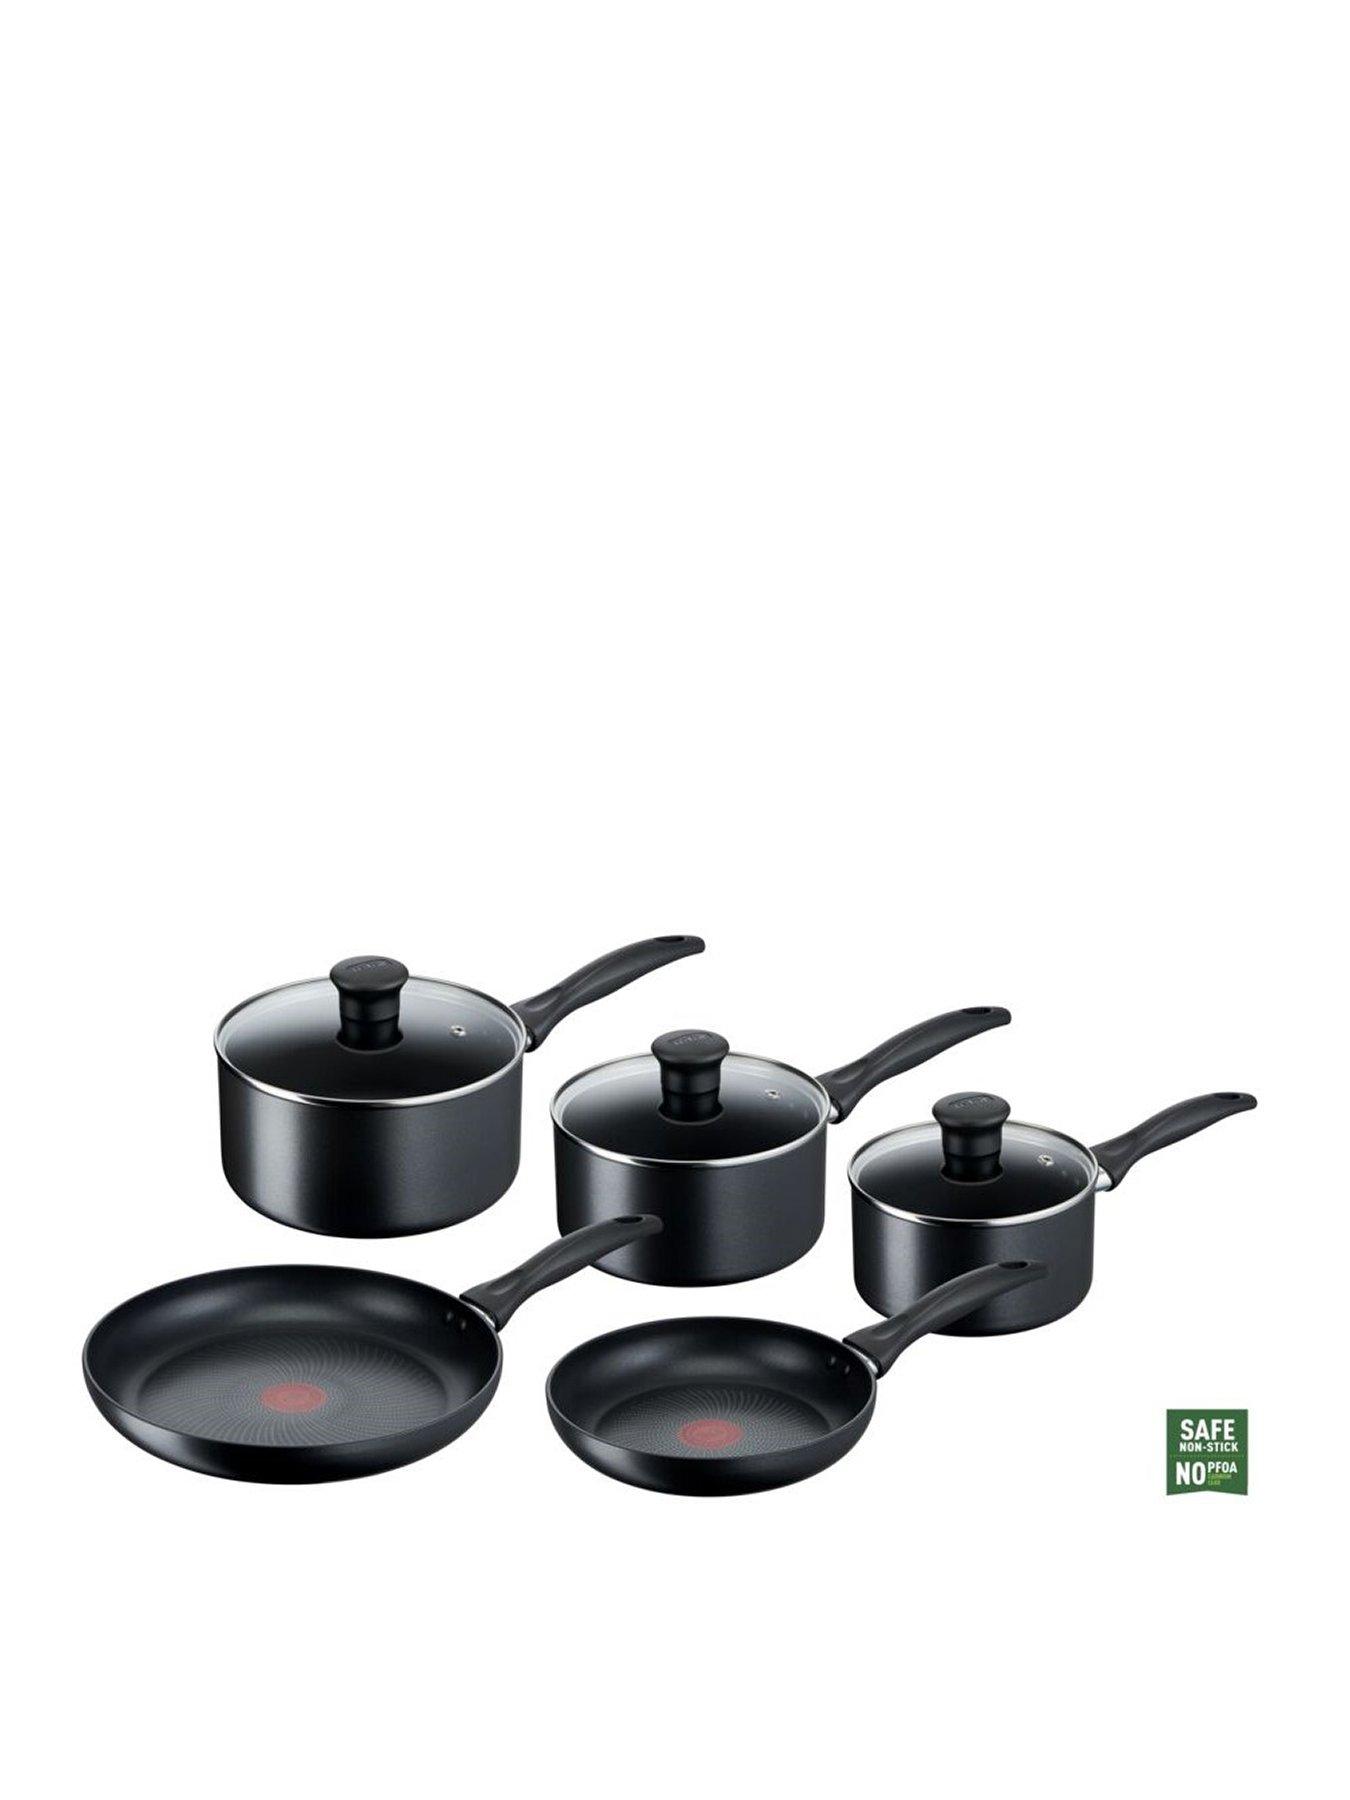 Kitchen Cooking Pot Set 3.3L Saucepan Enamel Cookware with Wood